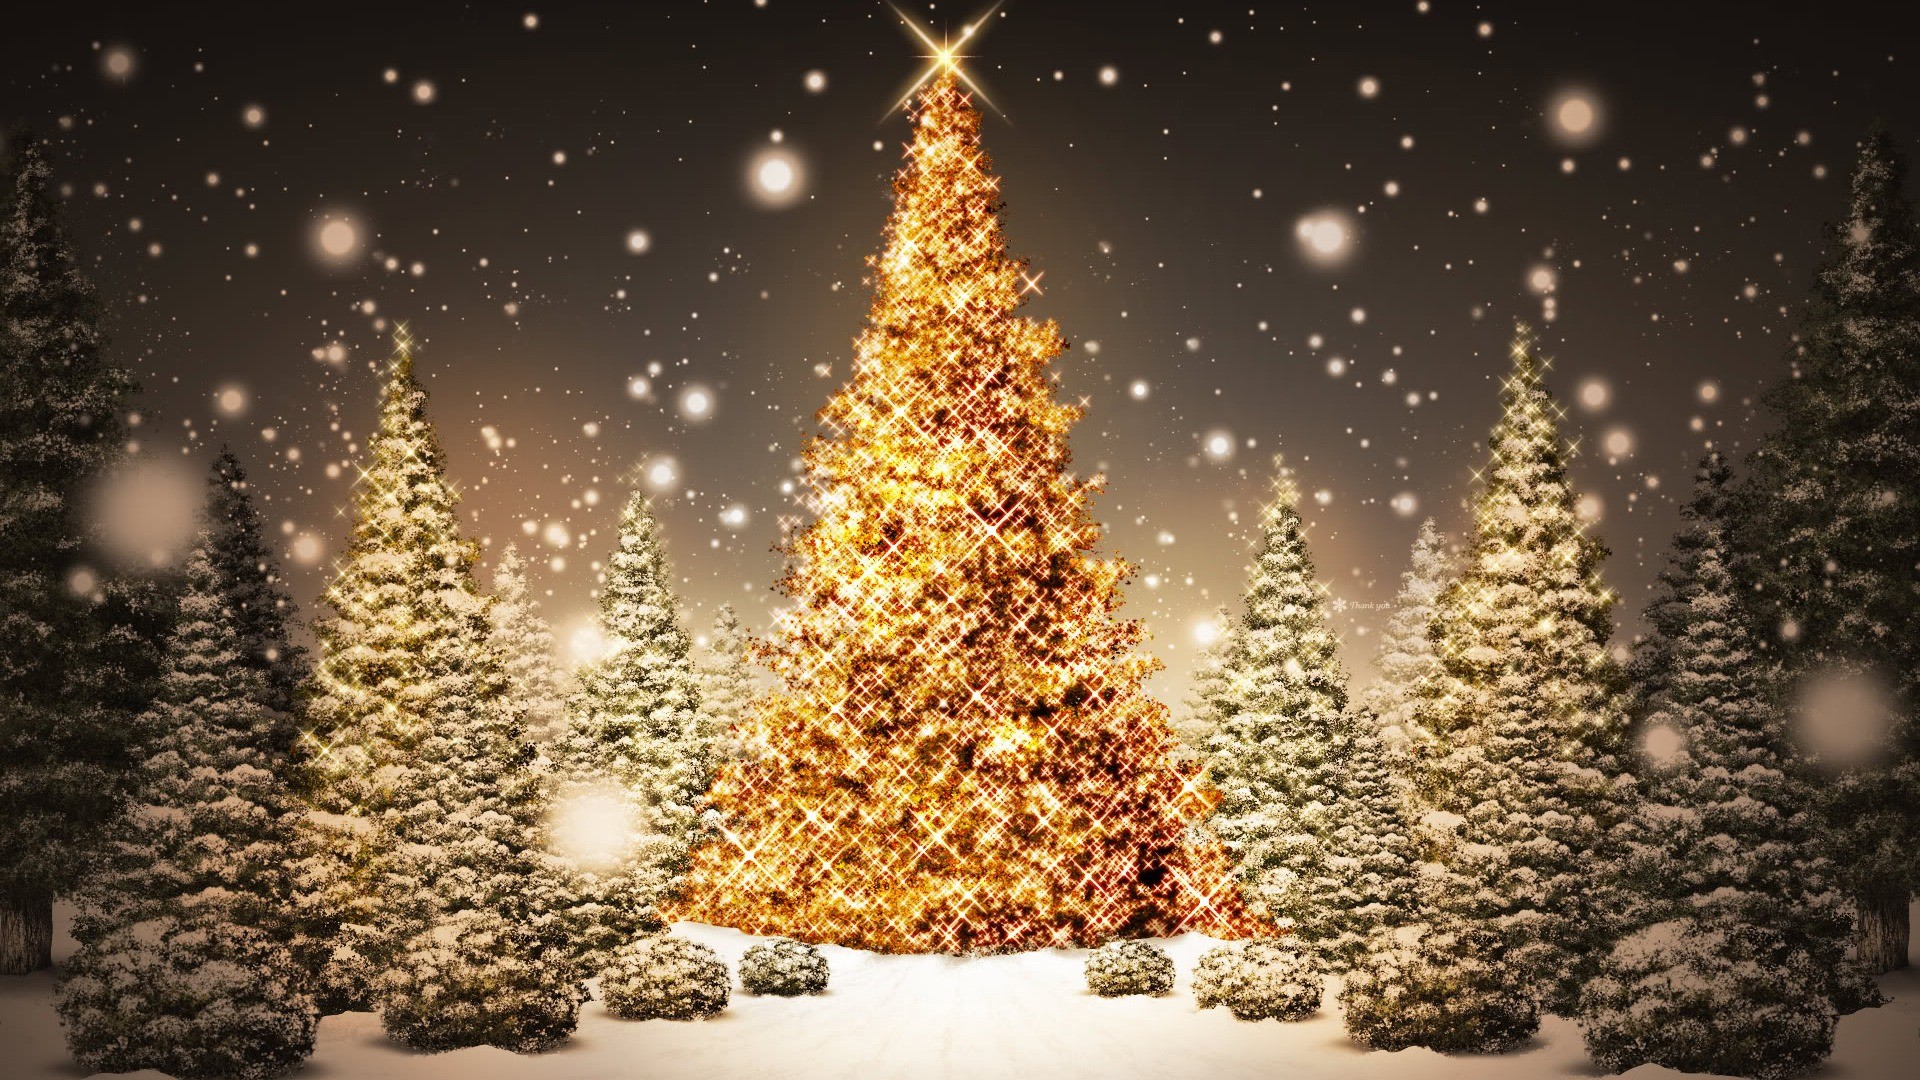 1920x1080 2015 free Christmas desktop backgrounds